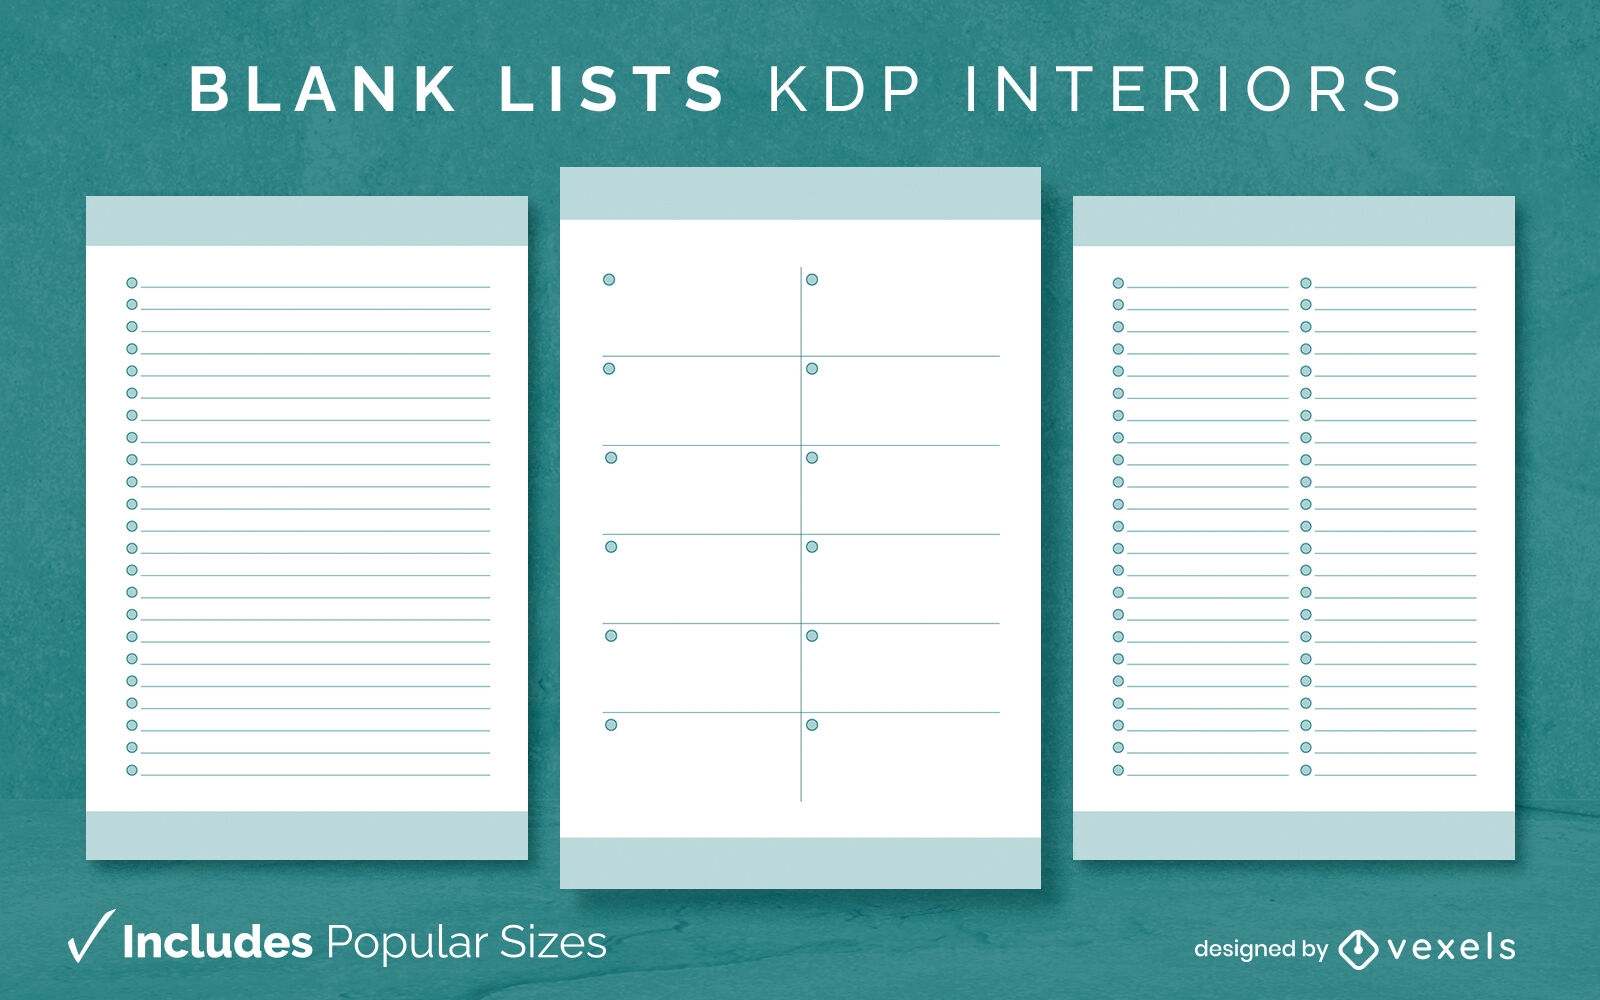 Blank lists KDP interior design template